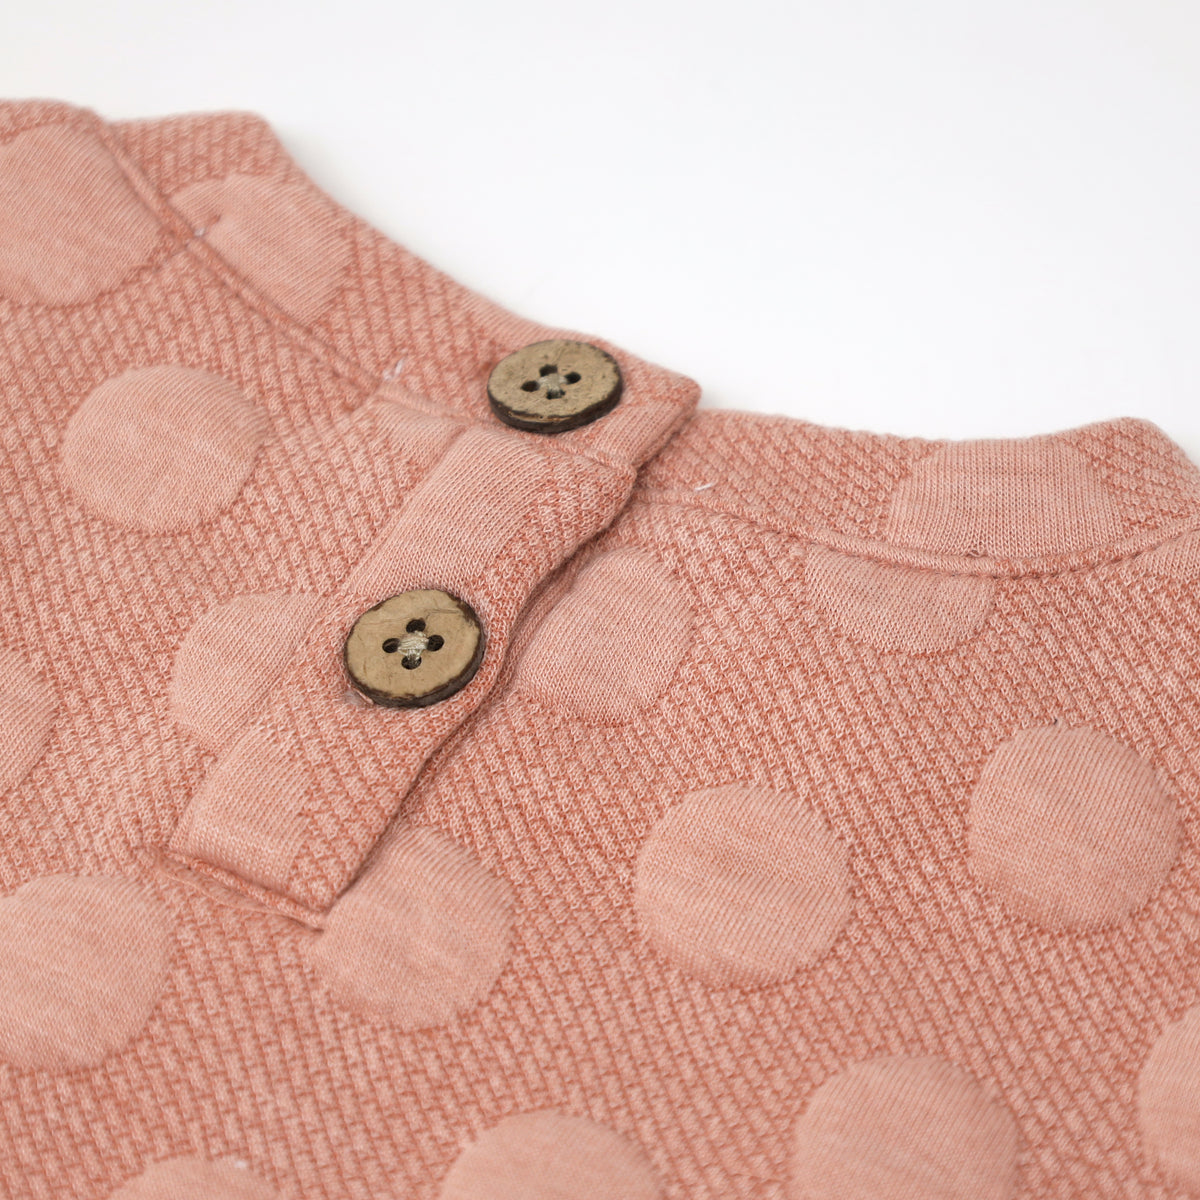 oh baby! Pucker Dot Slouch Sweatshirt - Vintage Pink